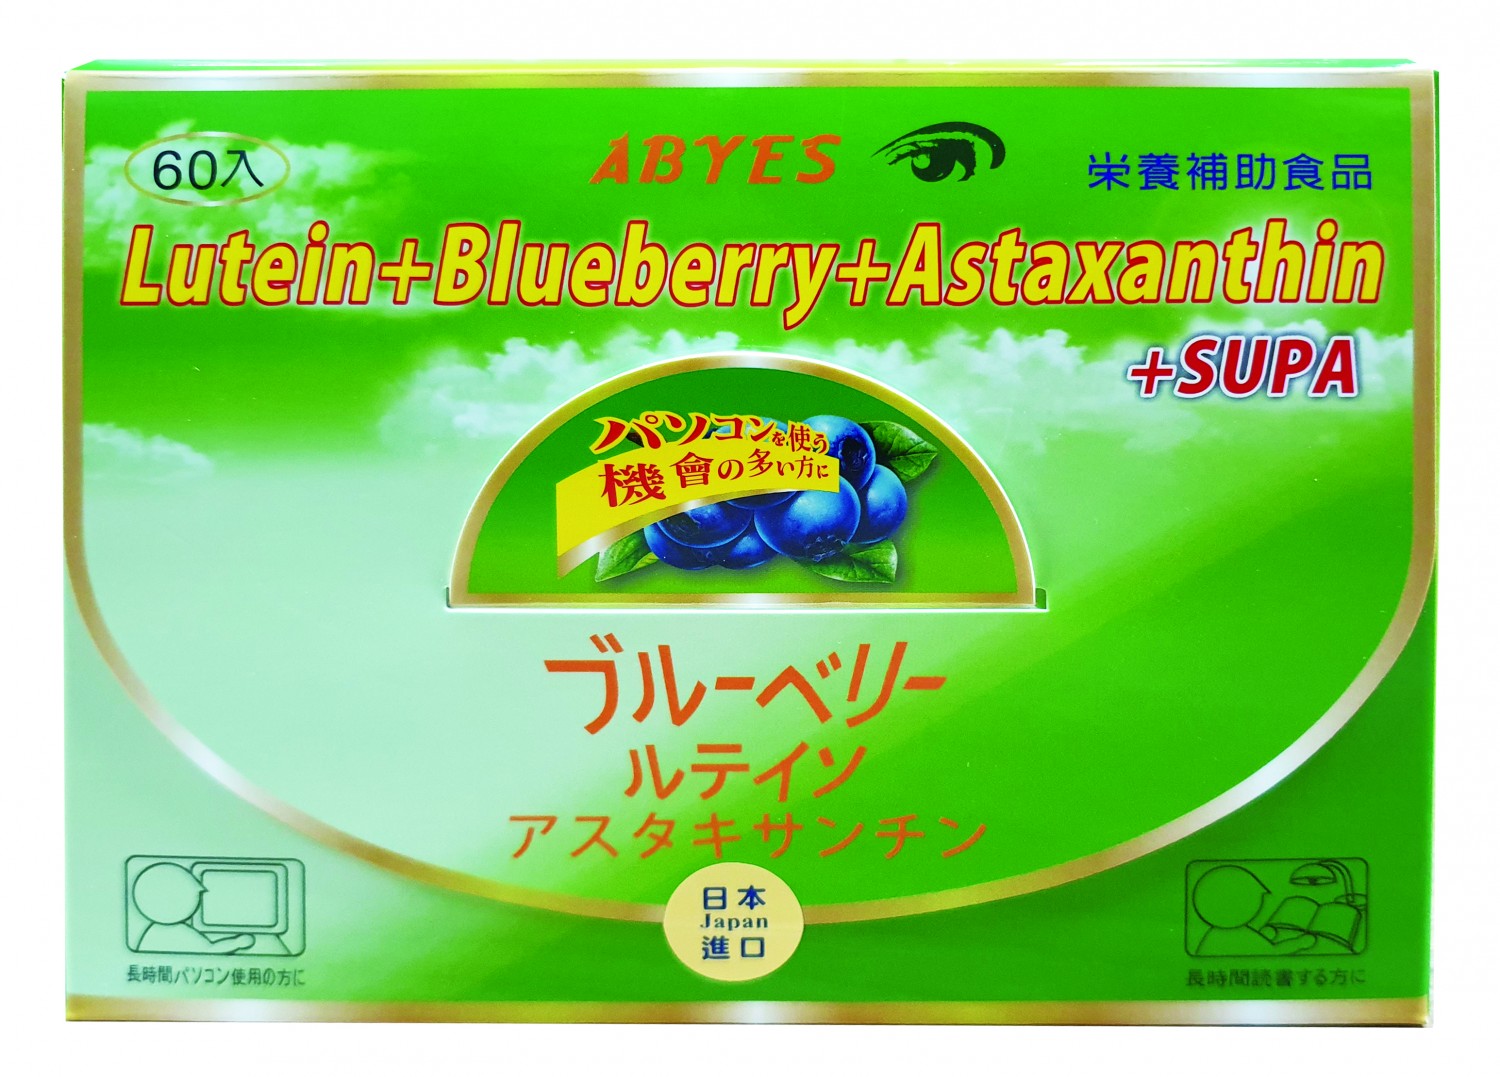 日本原裝 葉黃素+藍莓多酚+蝦紅素 PLUS 晶亮鮮明軟膠囊 日本國產 ブルーベリーソフトカプセル ( Lutein+Blueberry+Astaxanthin+SUPA ) (全素)(60顆裝/每顆300毫克)